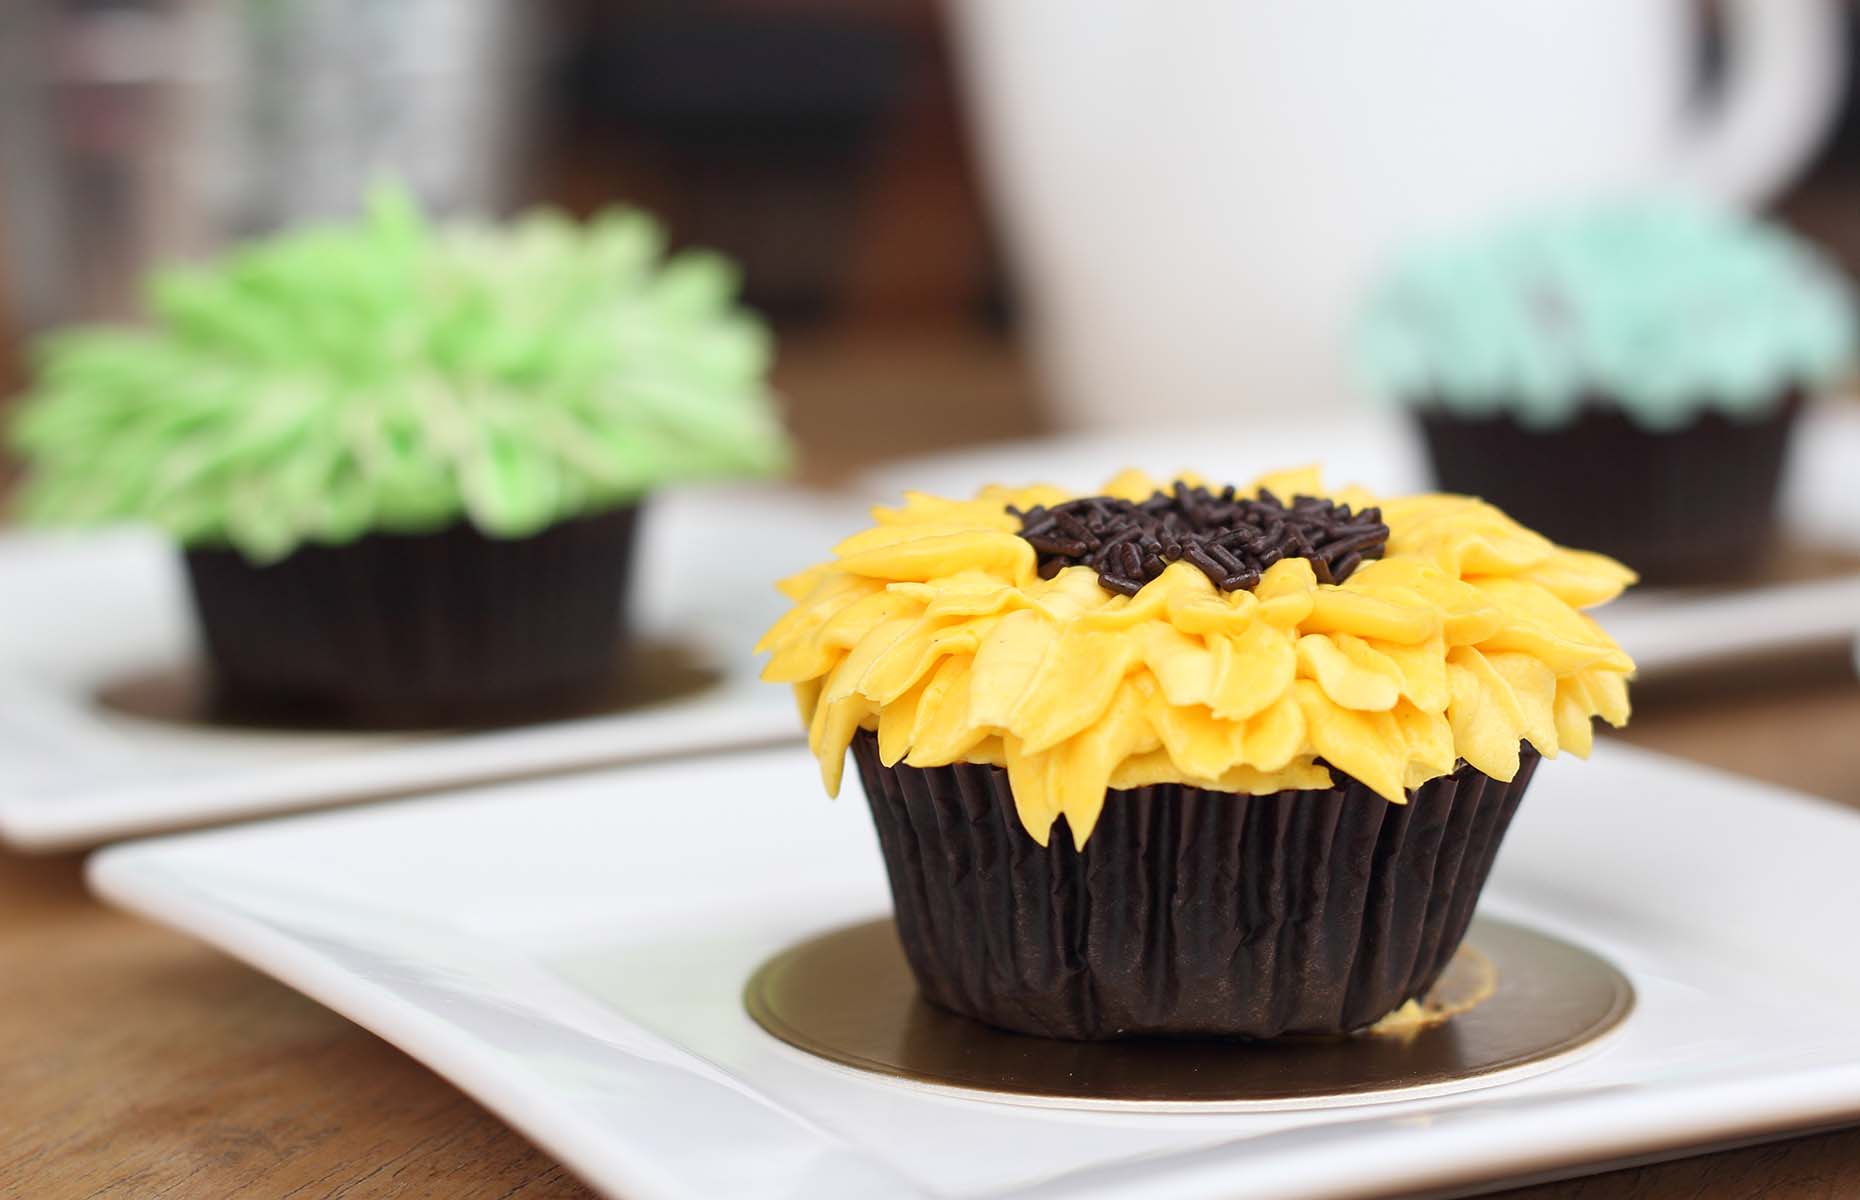 Sunflower cupcake (Image: Kwanbenz/Shutterstock)